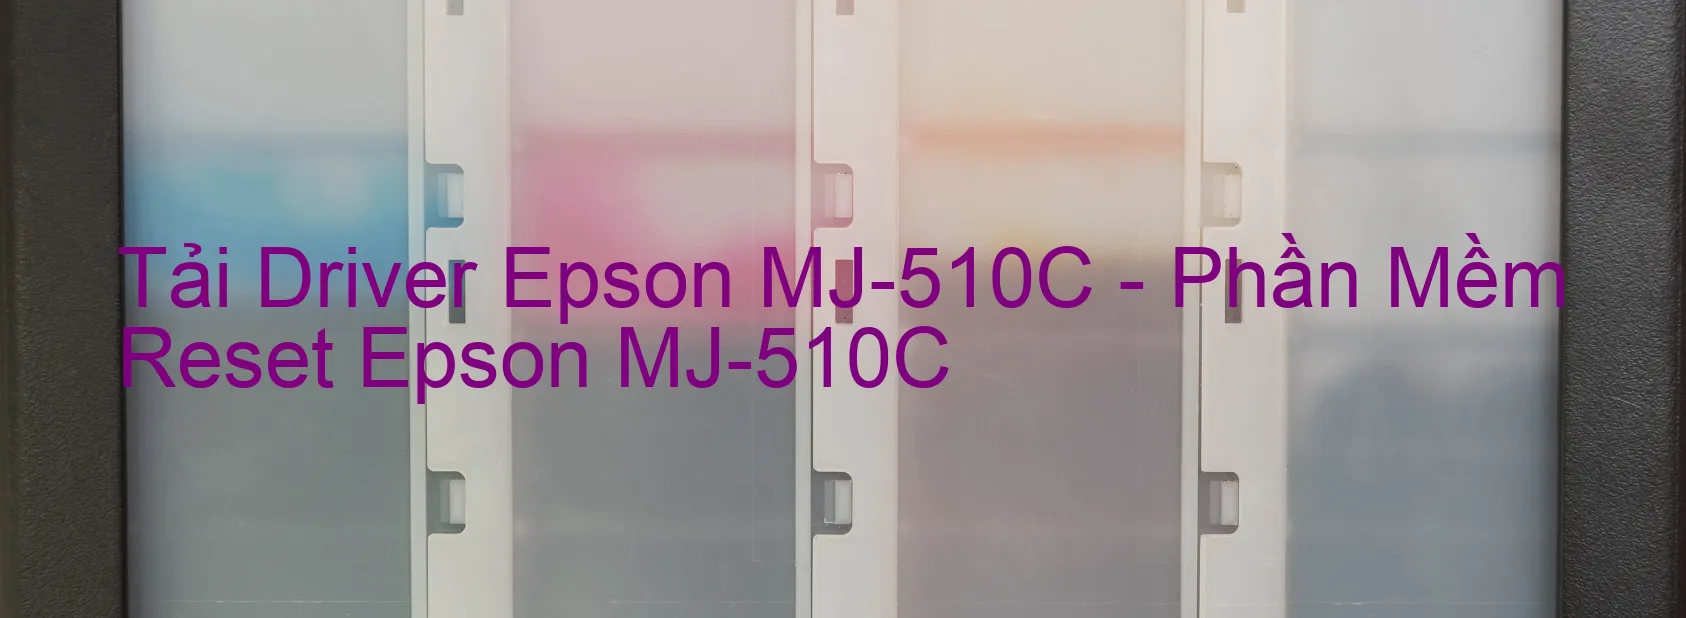 Driver Epson MJ-510C, Phần Mềm Reset Epson MJ-510C